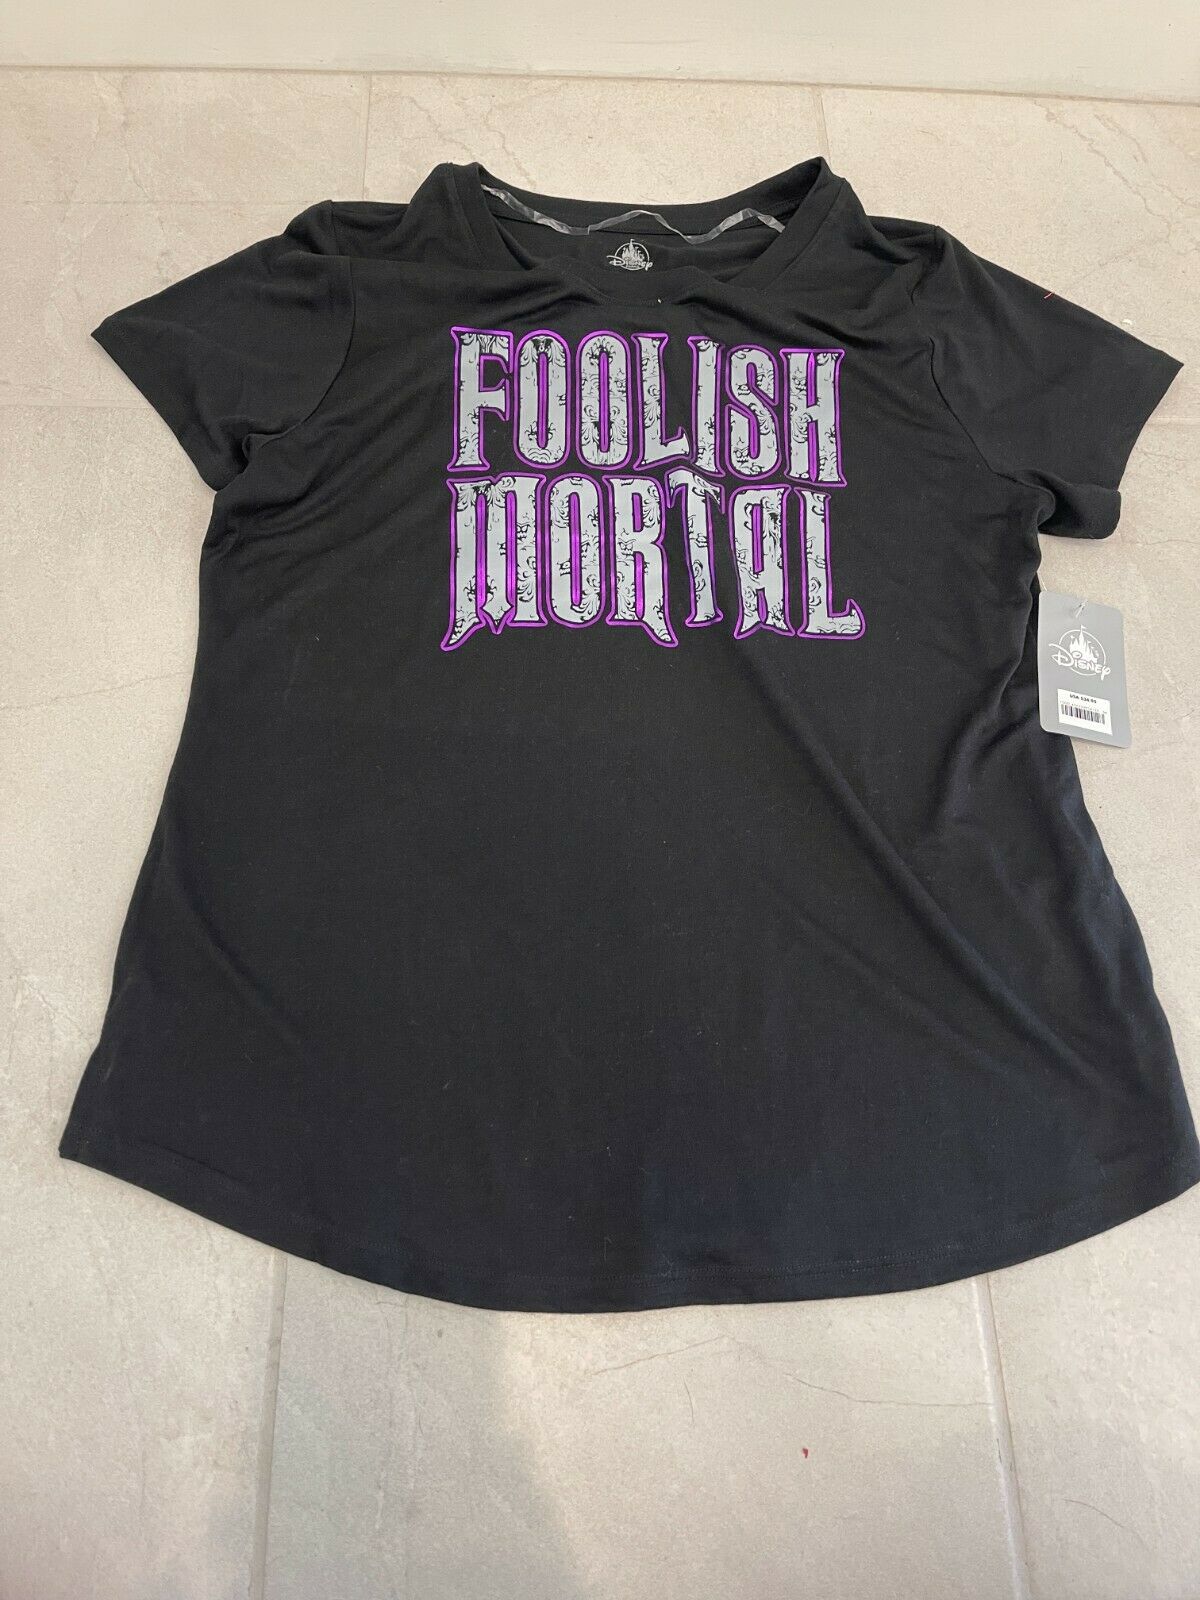 Nwt Disney Parks Exclusive Wdw Foolish Mortal Haunted Mansion Shirt Sz S